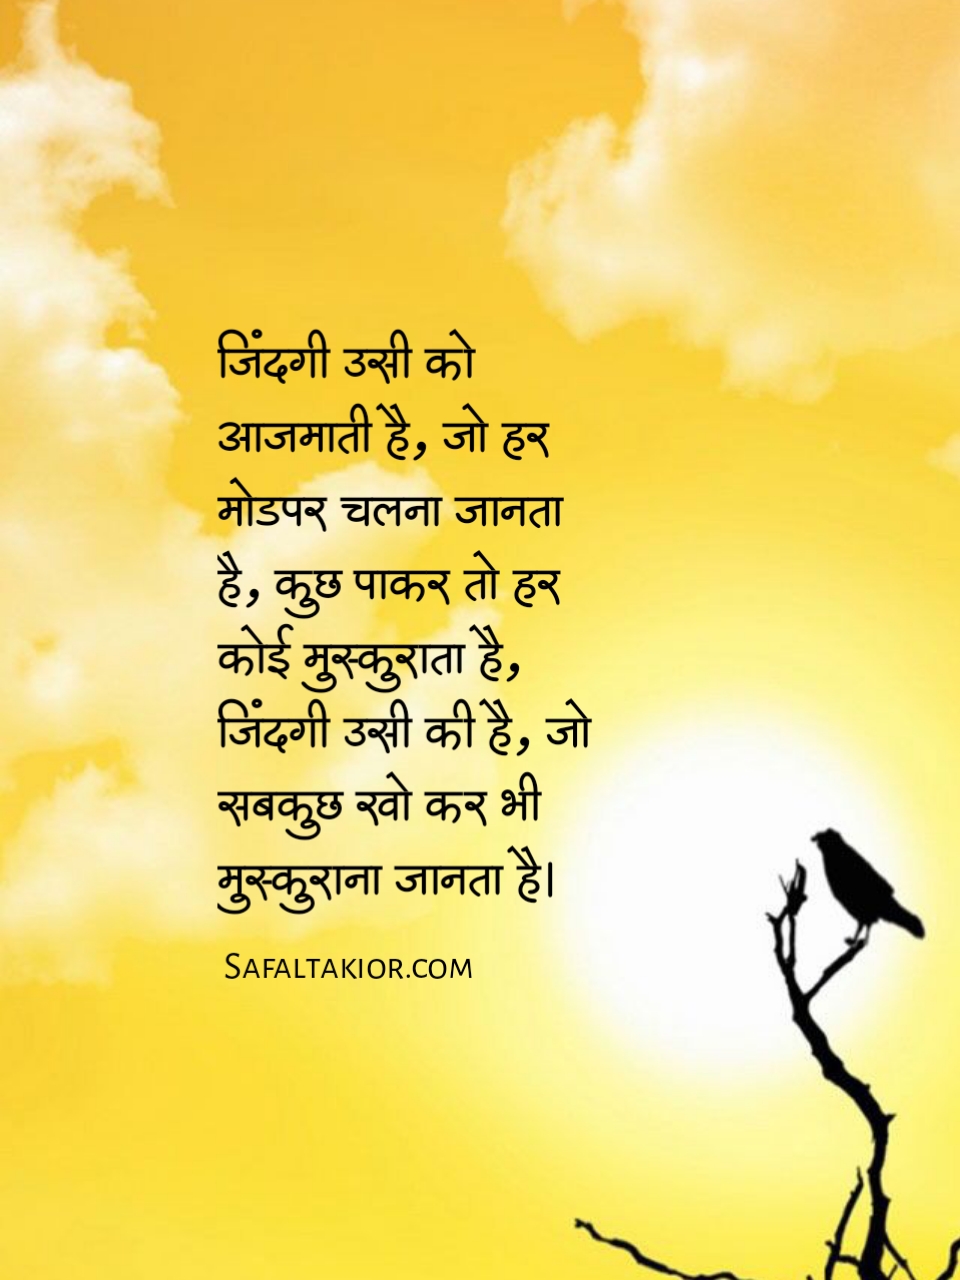 Struggle Life Quotes in Hindi